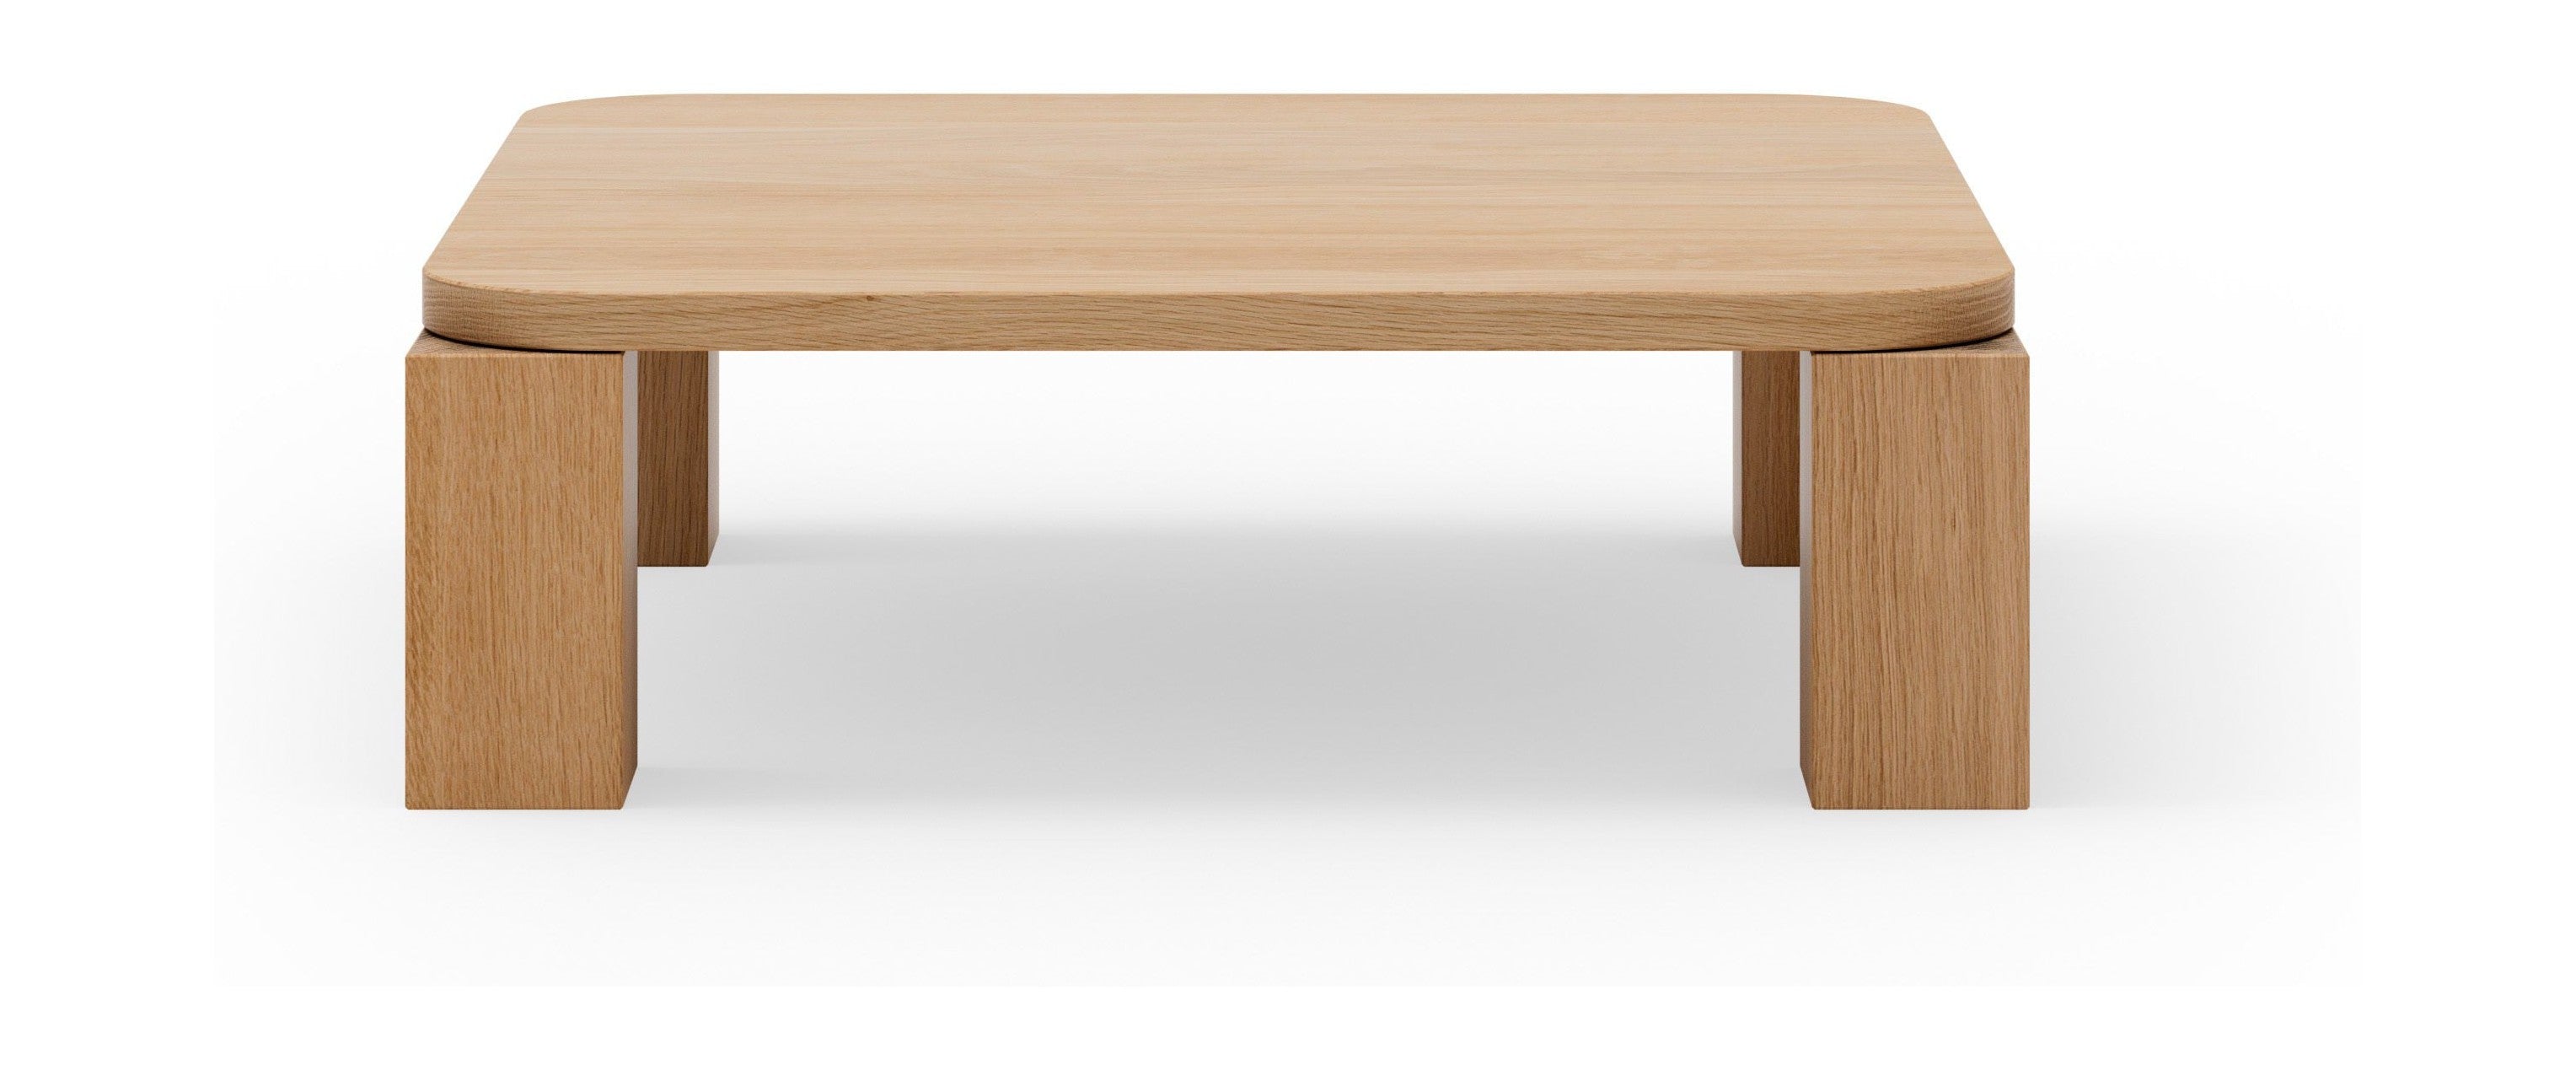 New Works Table basse Atlas chêne naturel, 82x82 cm